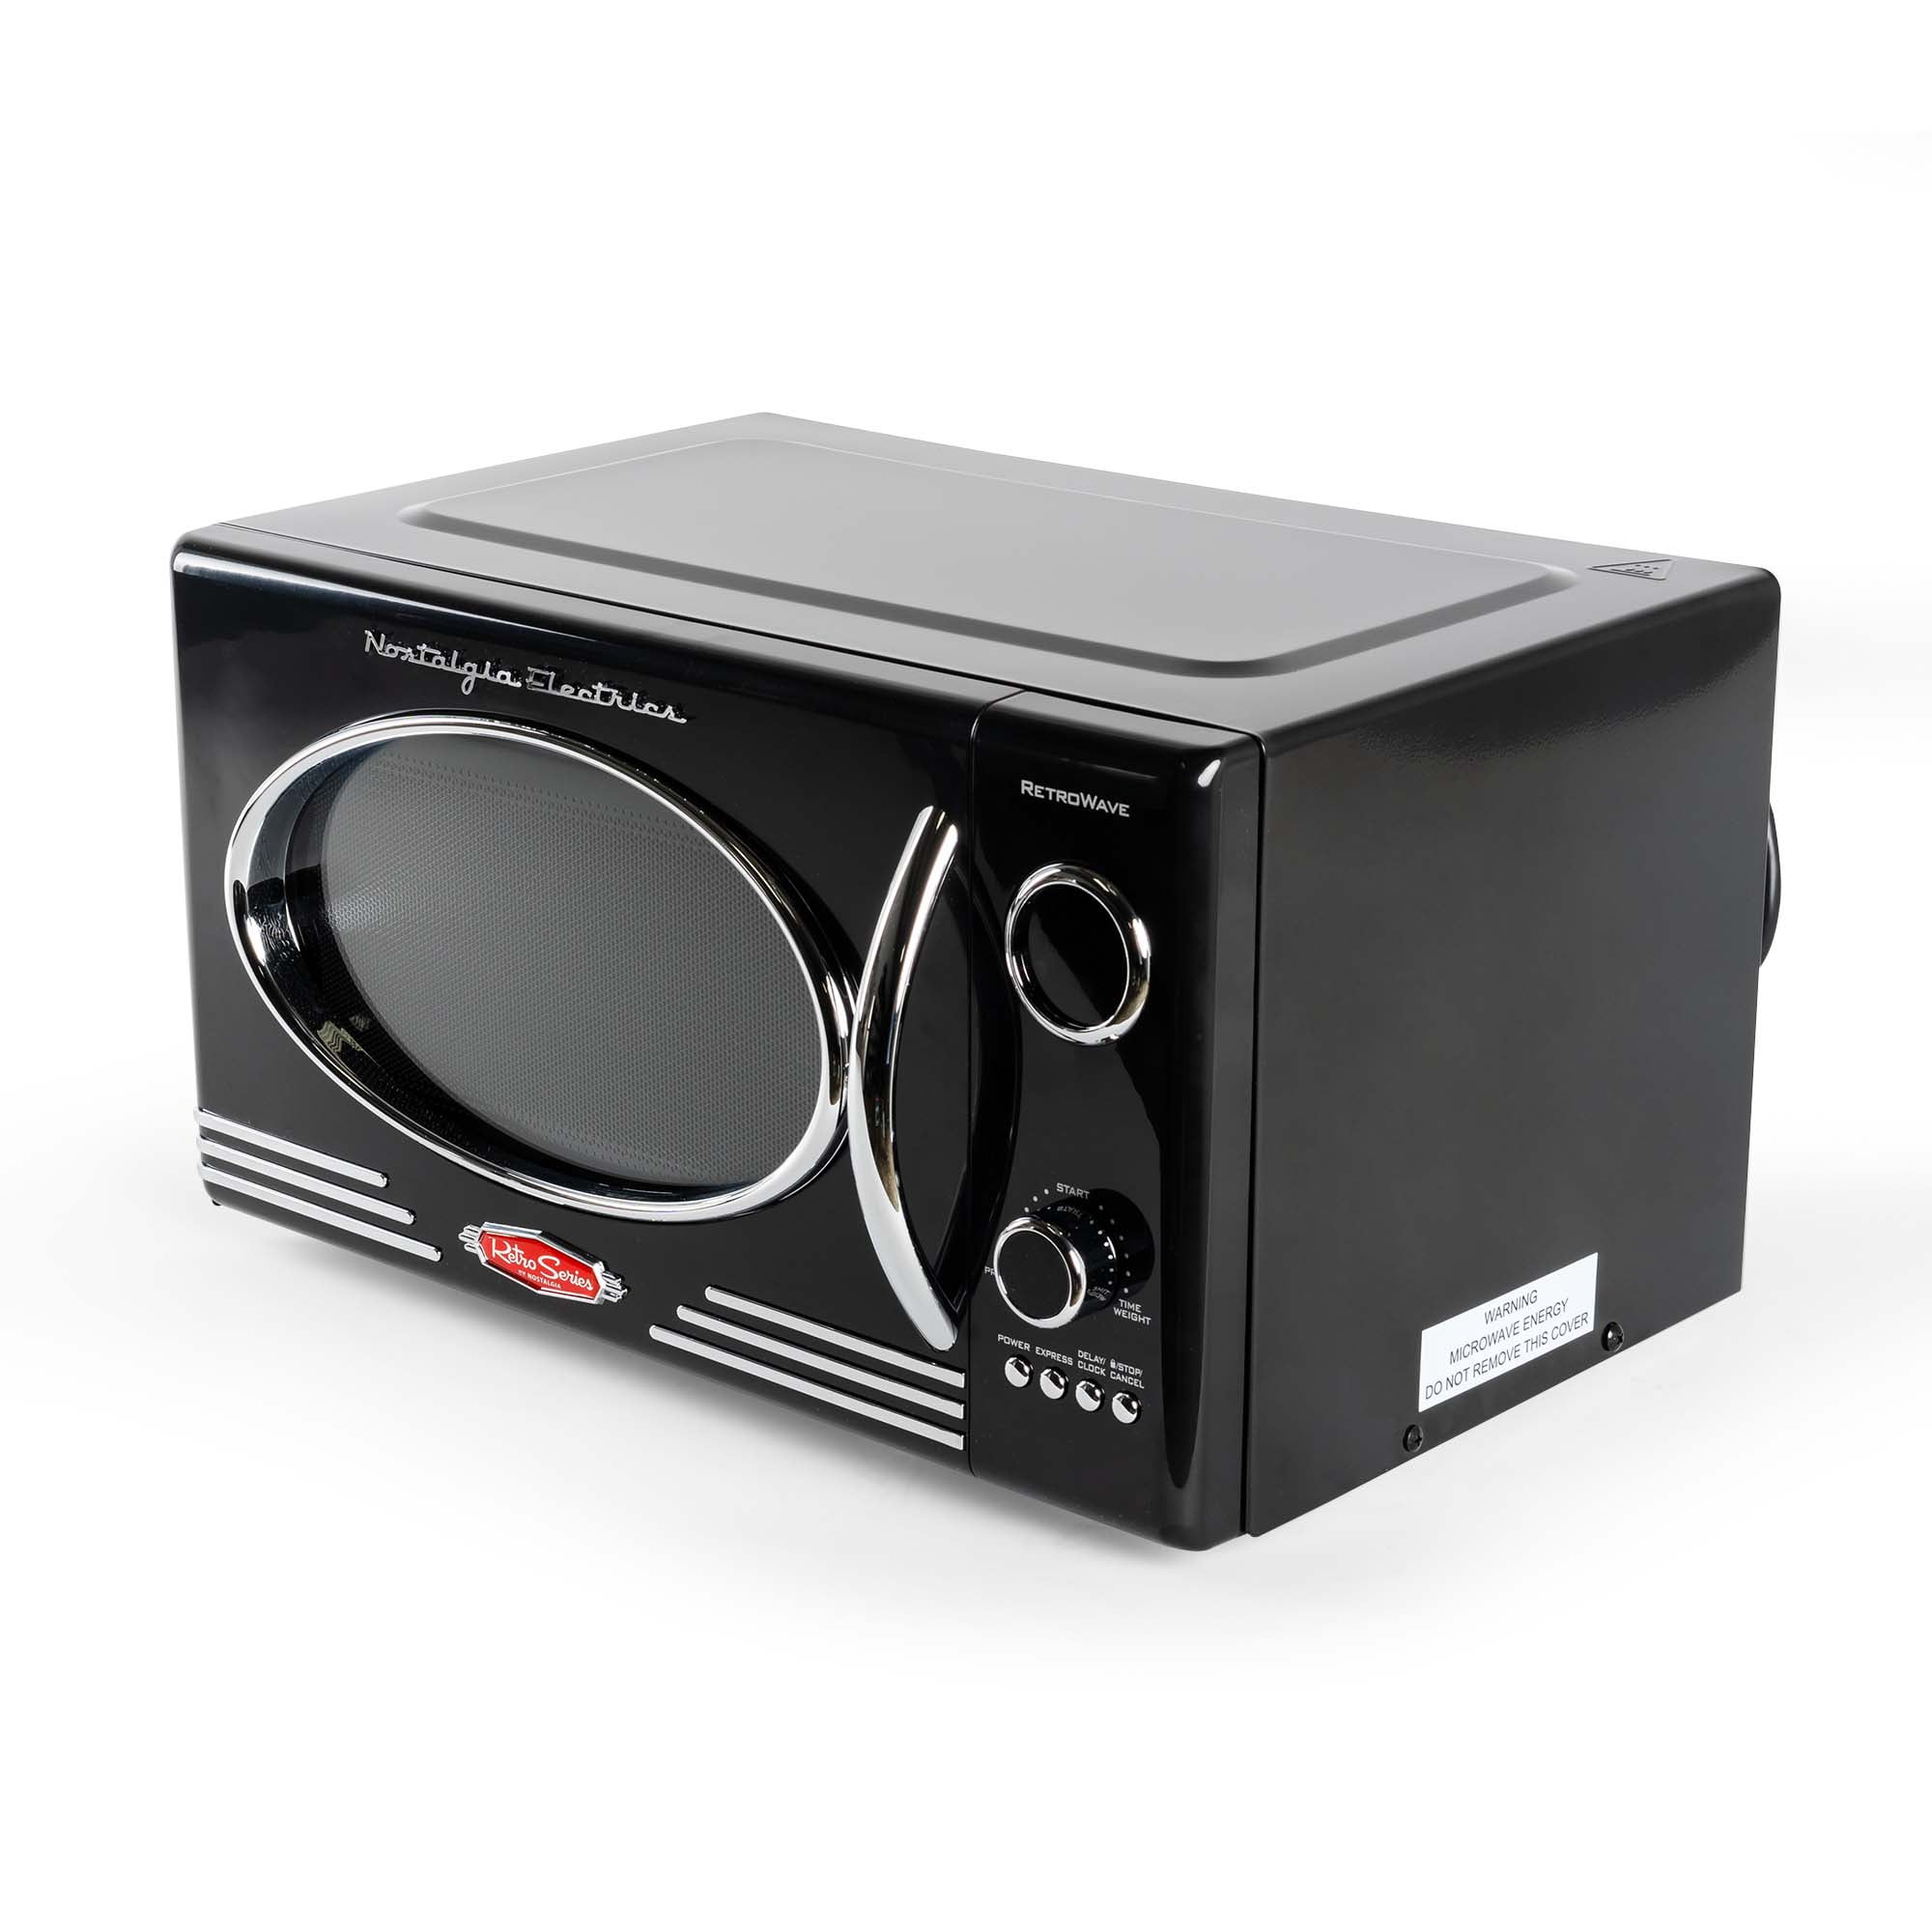 Nostalgia 0. 9 cu. ft. 800-Watt Retro Microwave Oven in Aqua NRMO9AQ - The  Home Depot